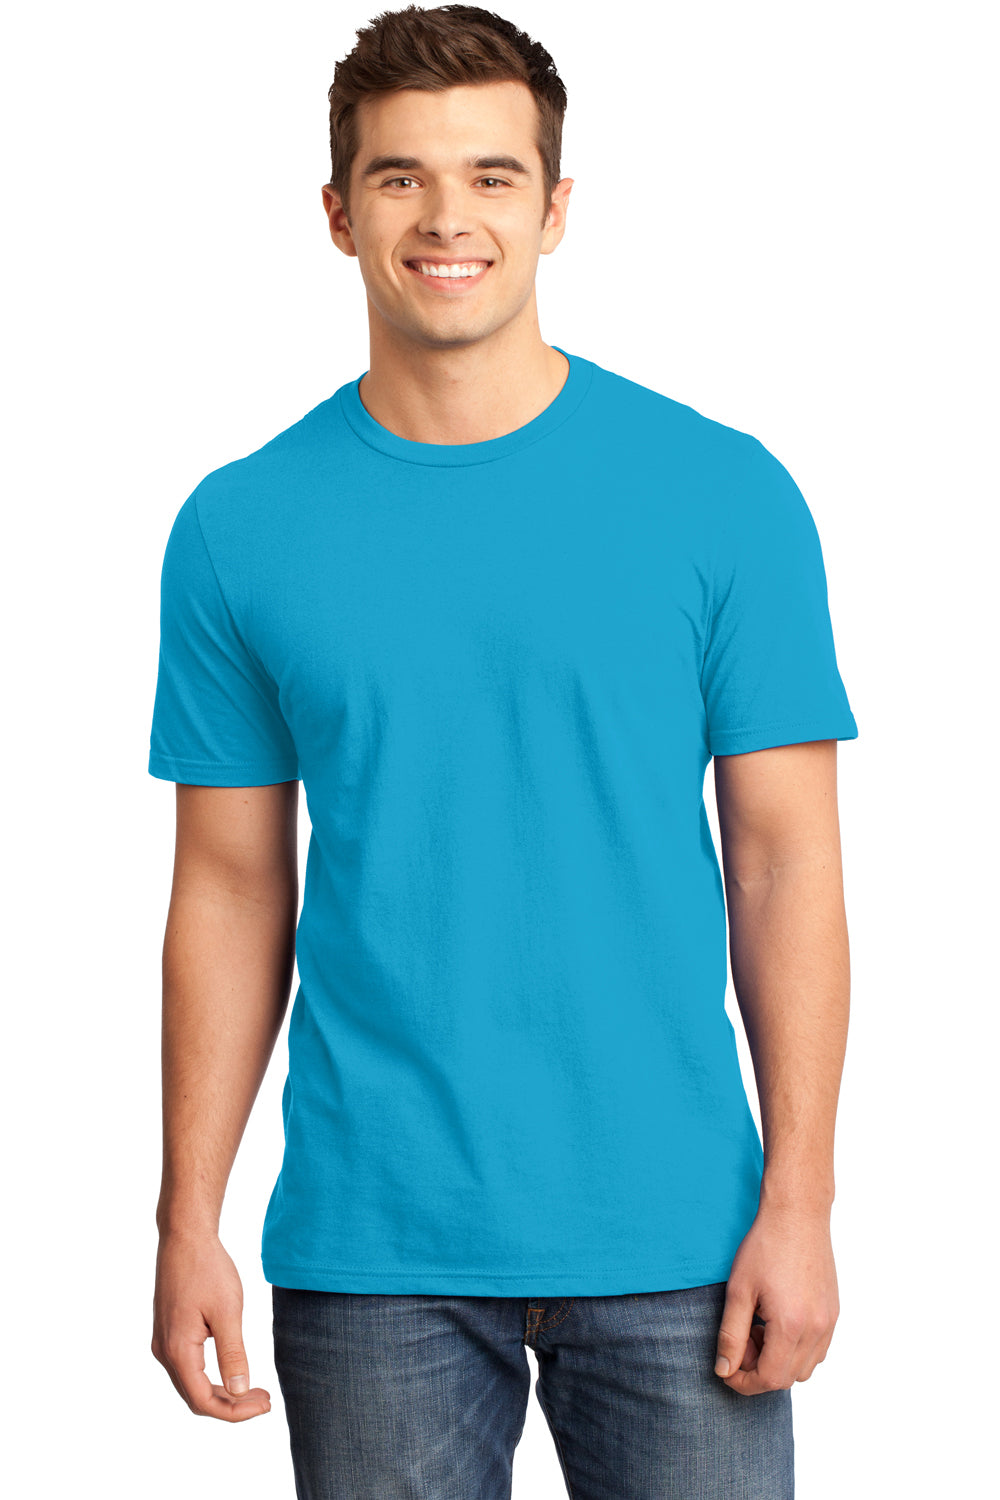 District DT6000 Mens Very Important Short Sleeve Crewneck T-Shirt Light Turquoise Blue Front